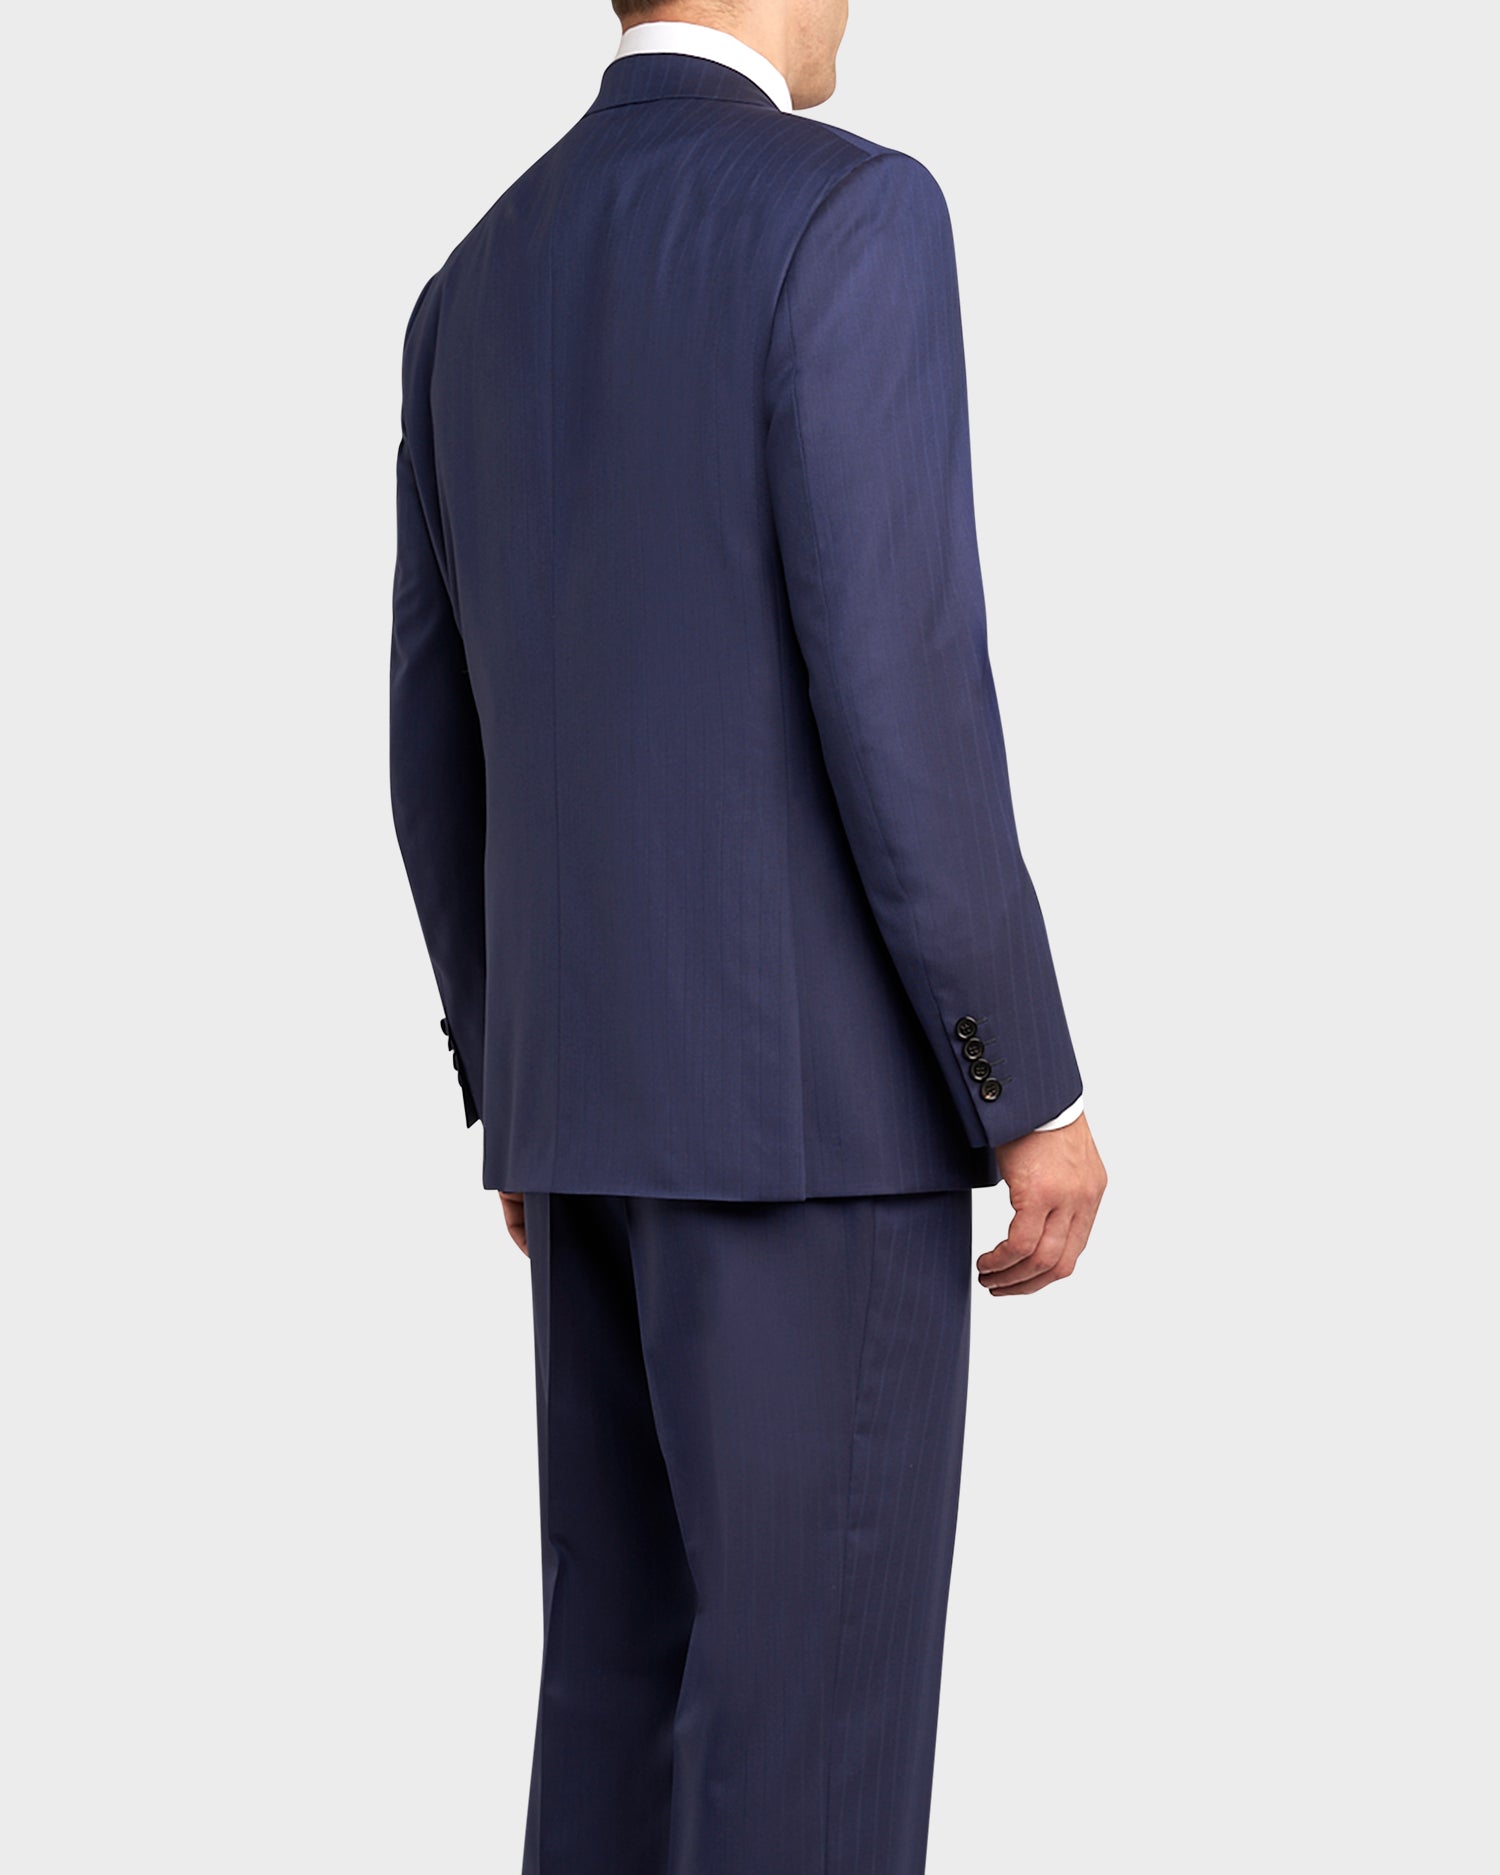 Blue Pinstripe Pure Wool Suit